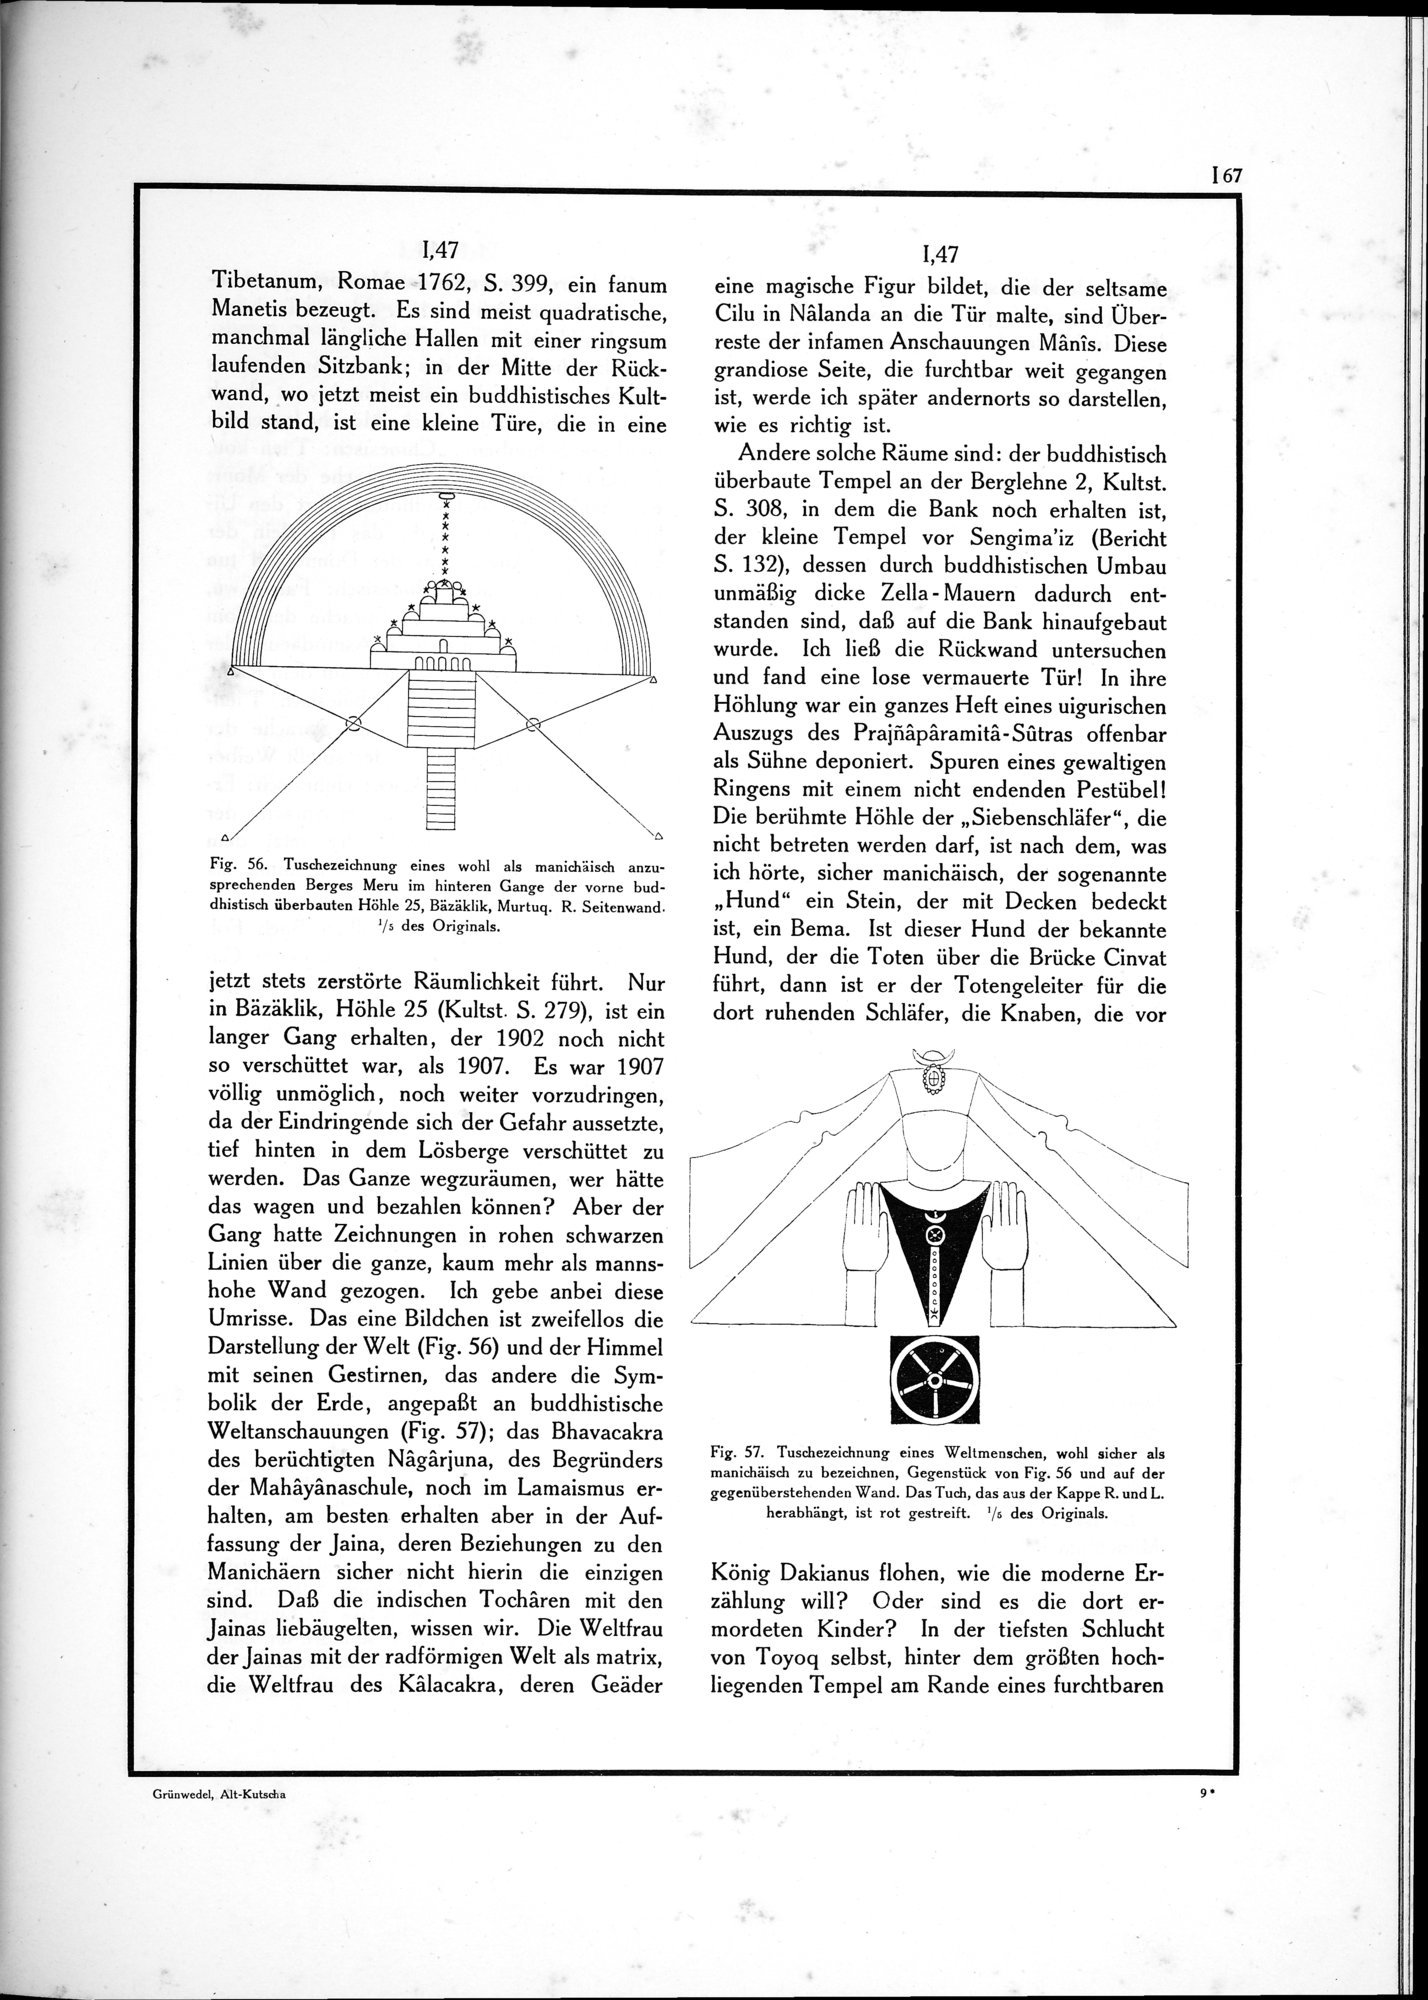 Alt-Kutscha : vol.1 / Page 79 (Grayscale High Resolution Image)